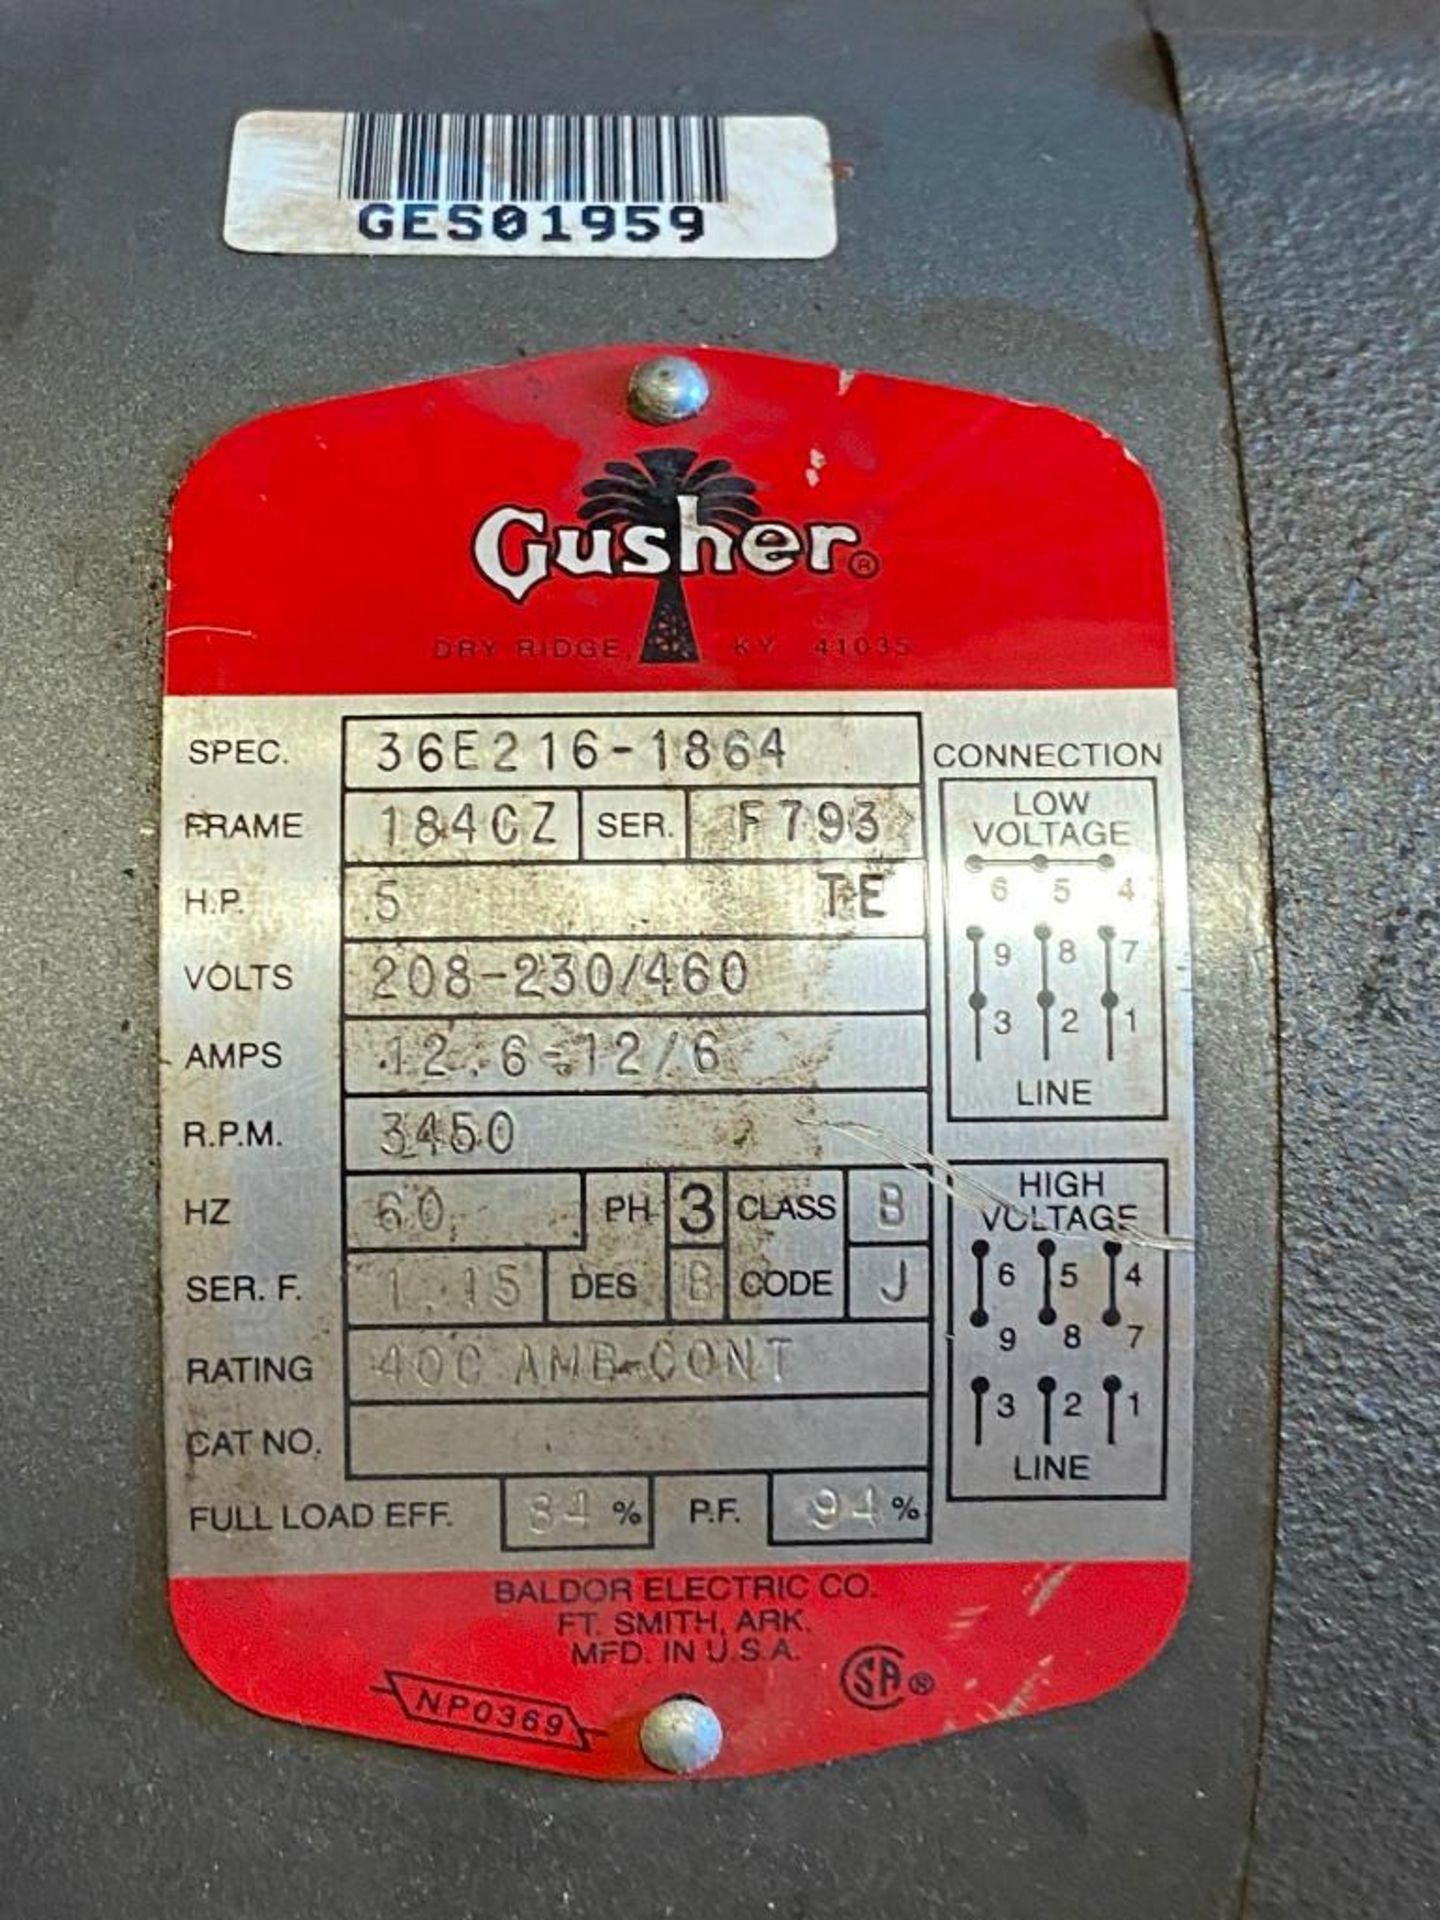 Gusher #36E216-1864 5 HP 208-230/460V 3PH Centrifugal Coolant Pump 3540 RPM - Image 3 of 3